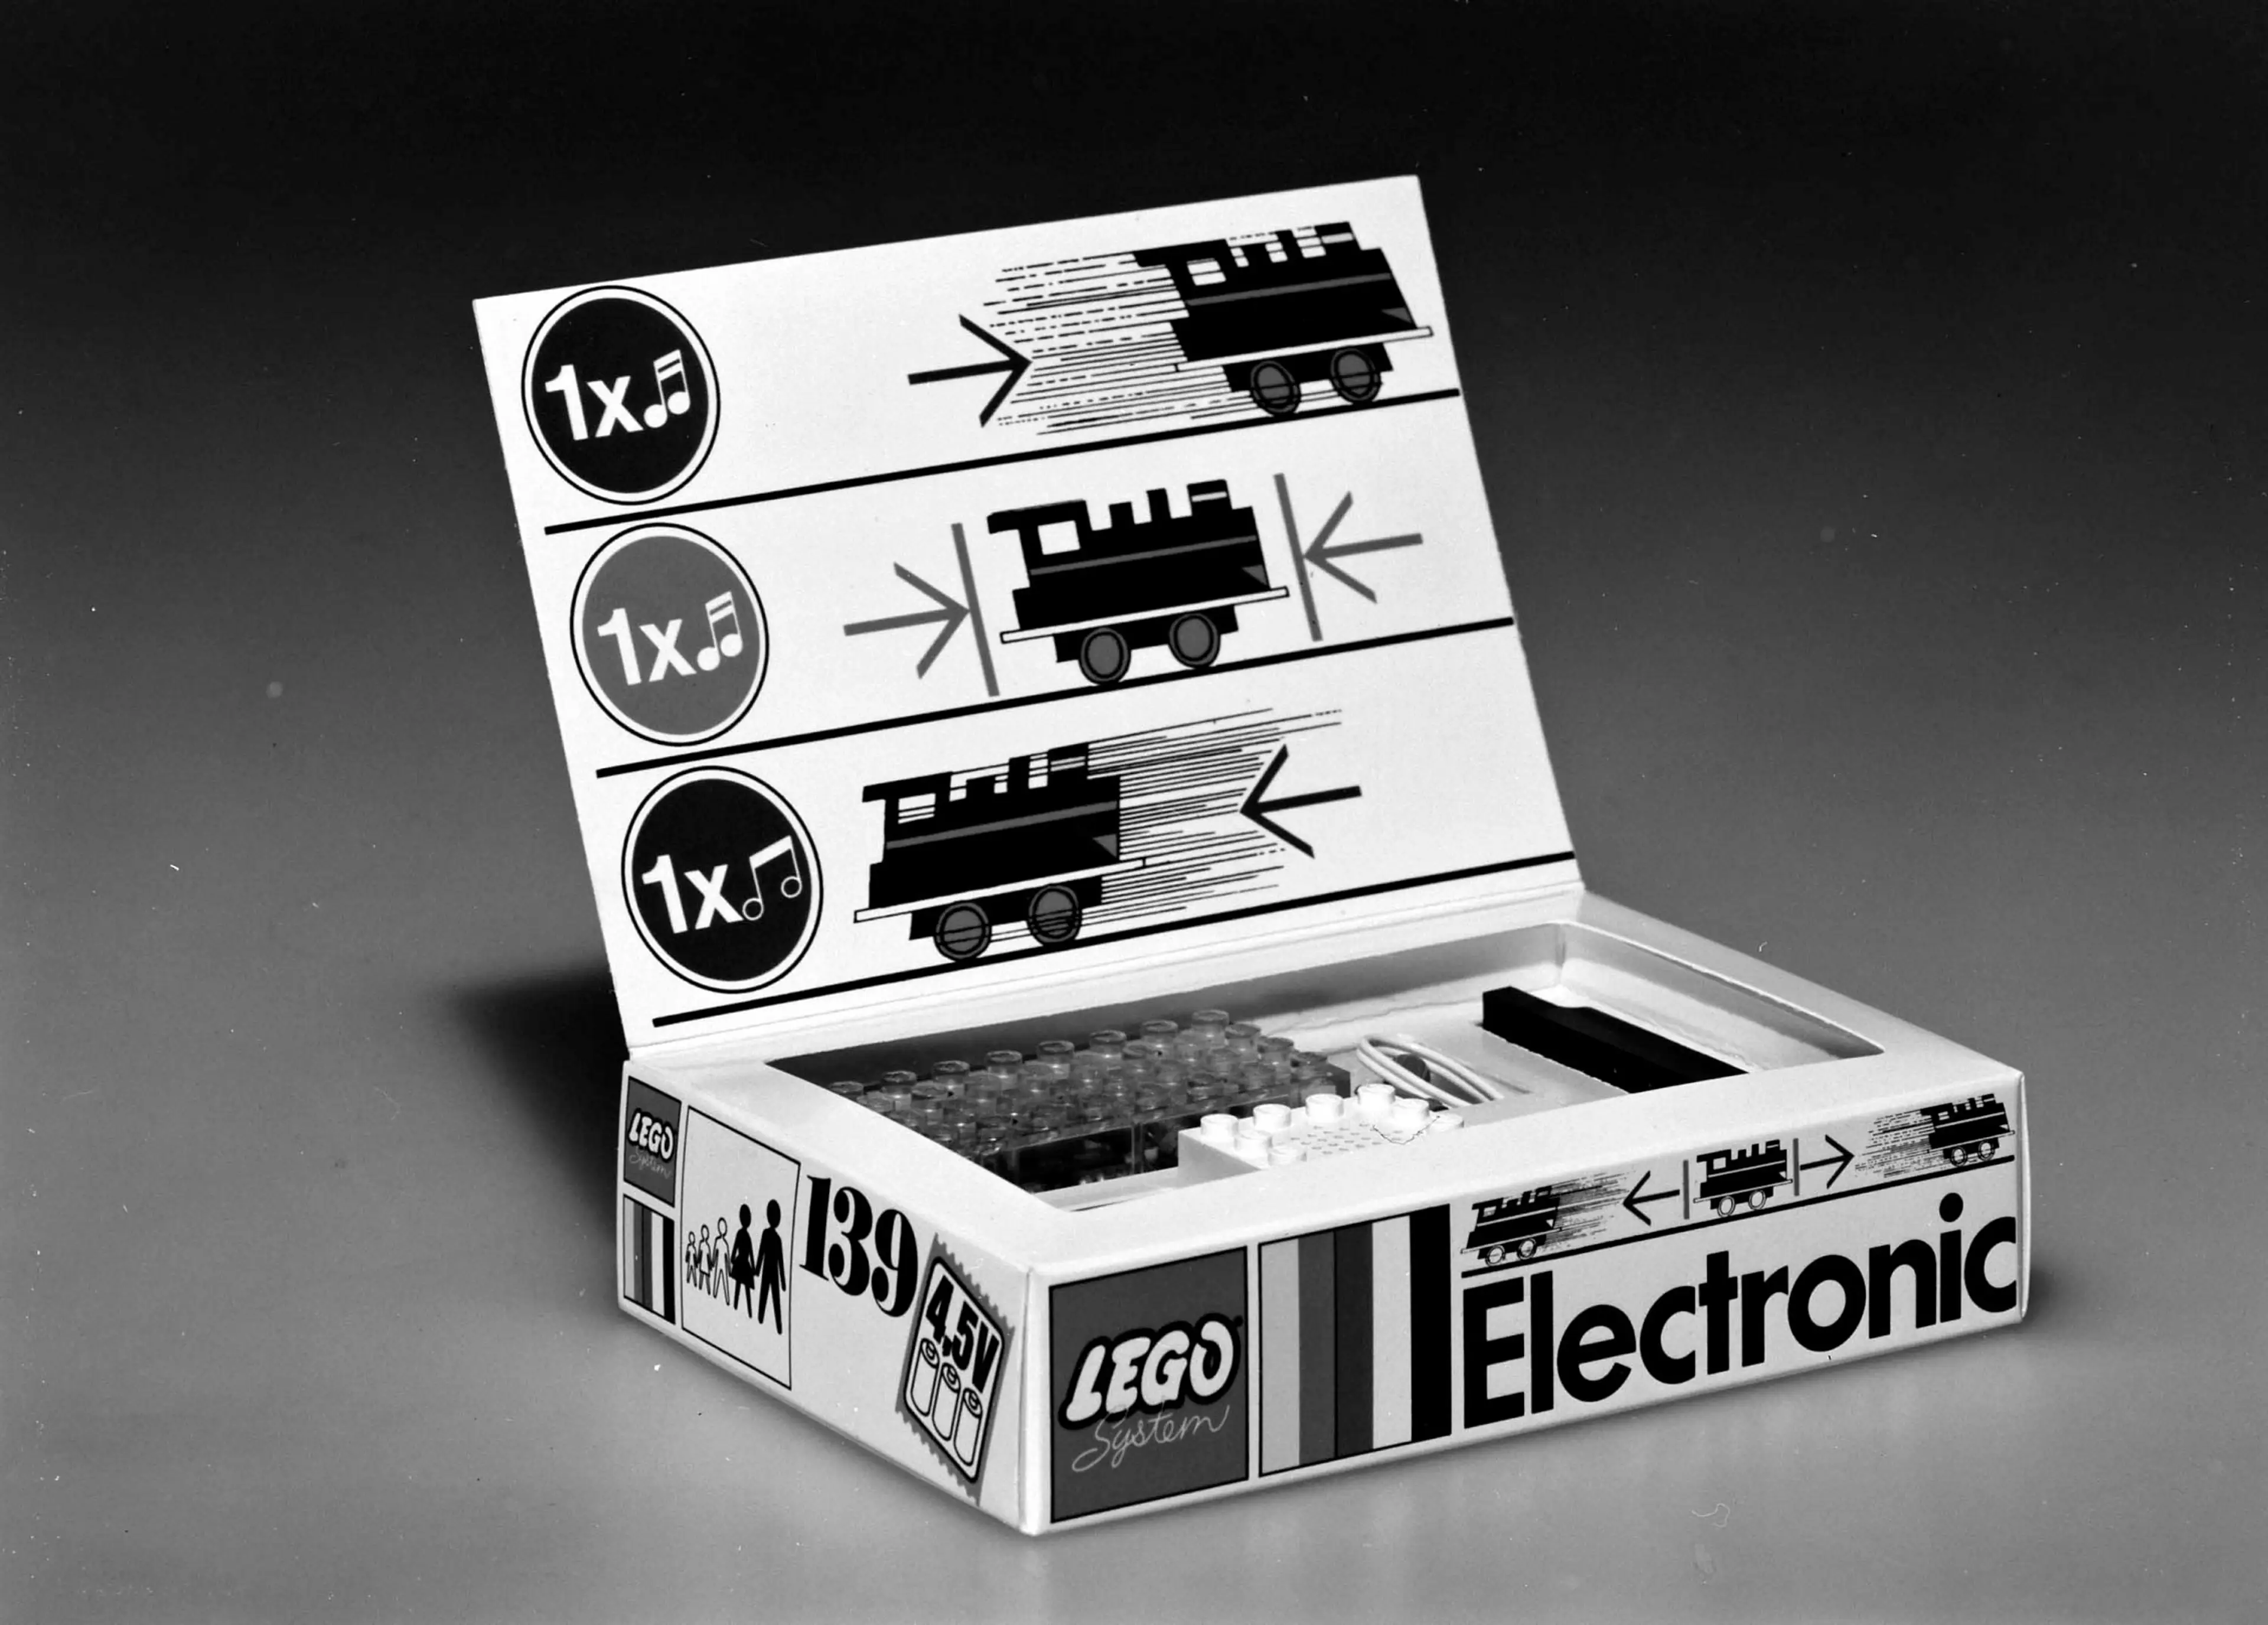 box of the LEGO Electronic train